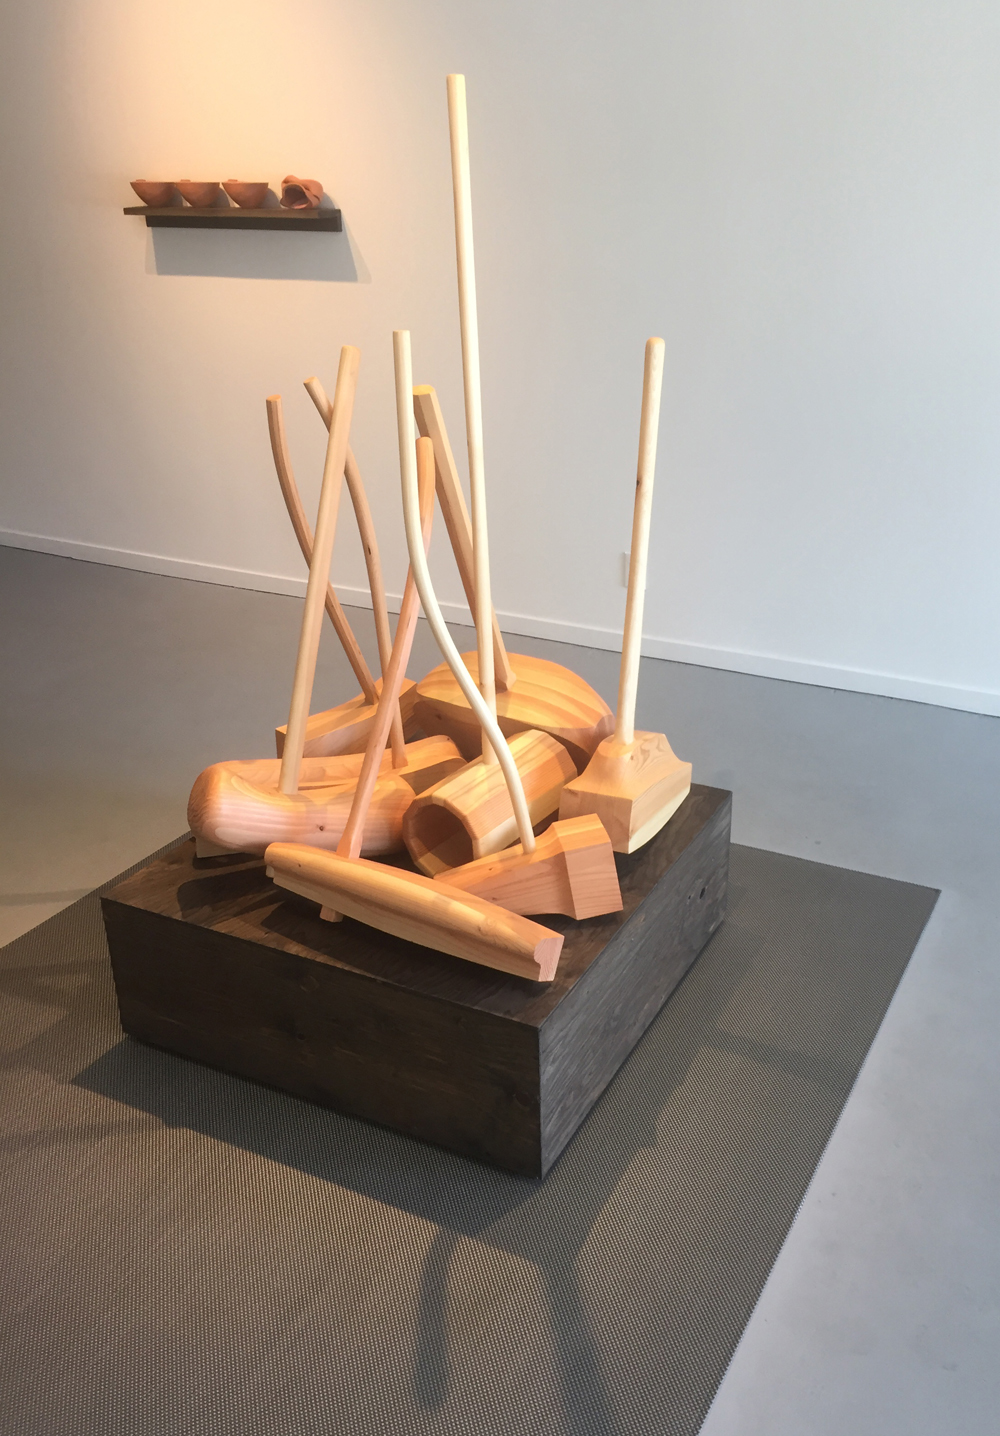 Matt Sellars, Coalesce, 2018, fir , 55 x 37 x 38 inches on wooden base 13 x 37 x 37 inches